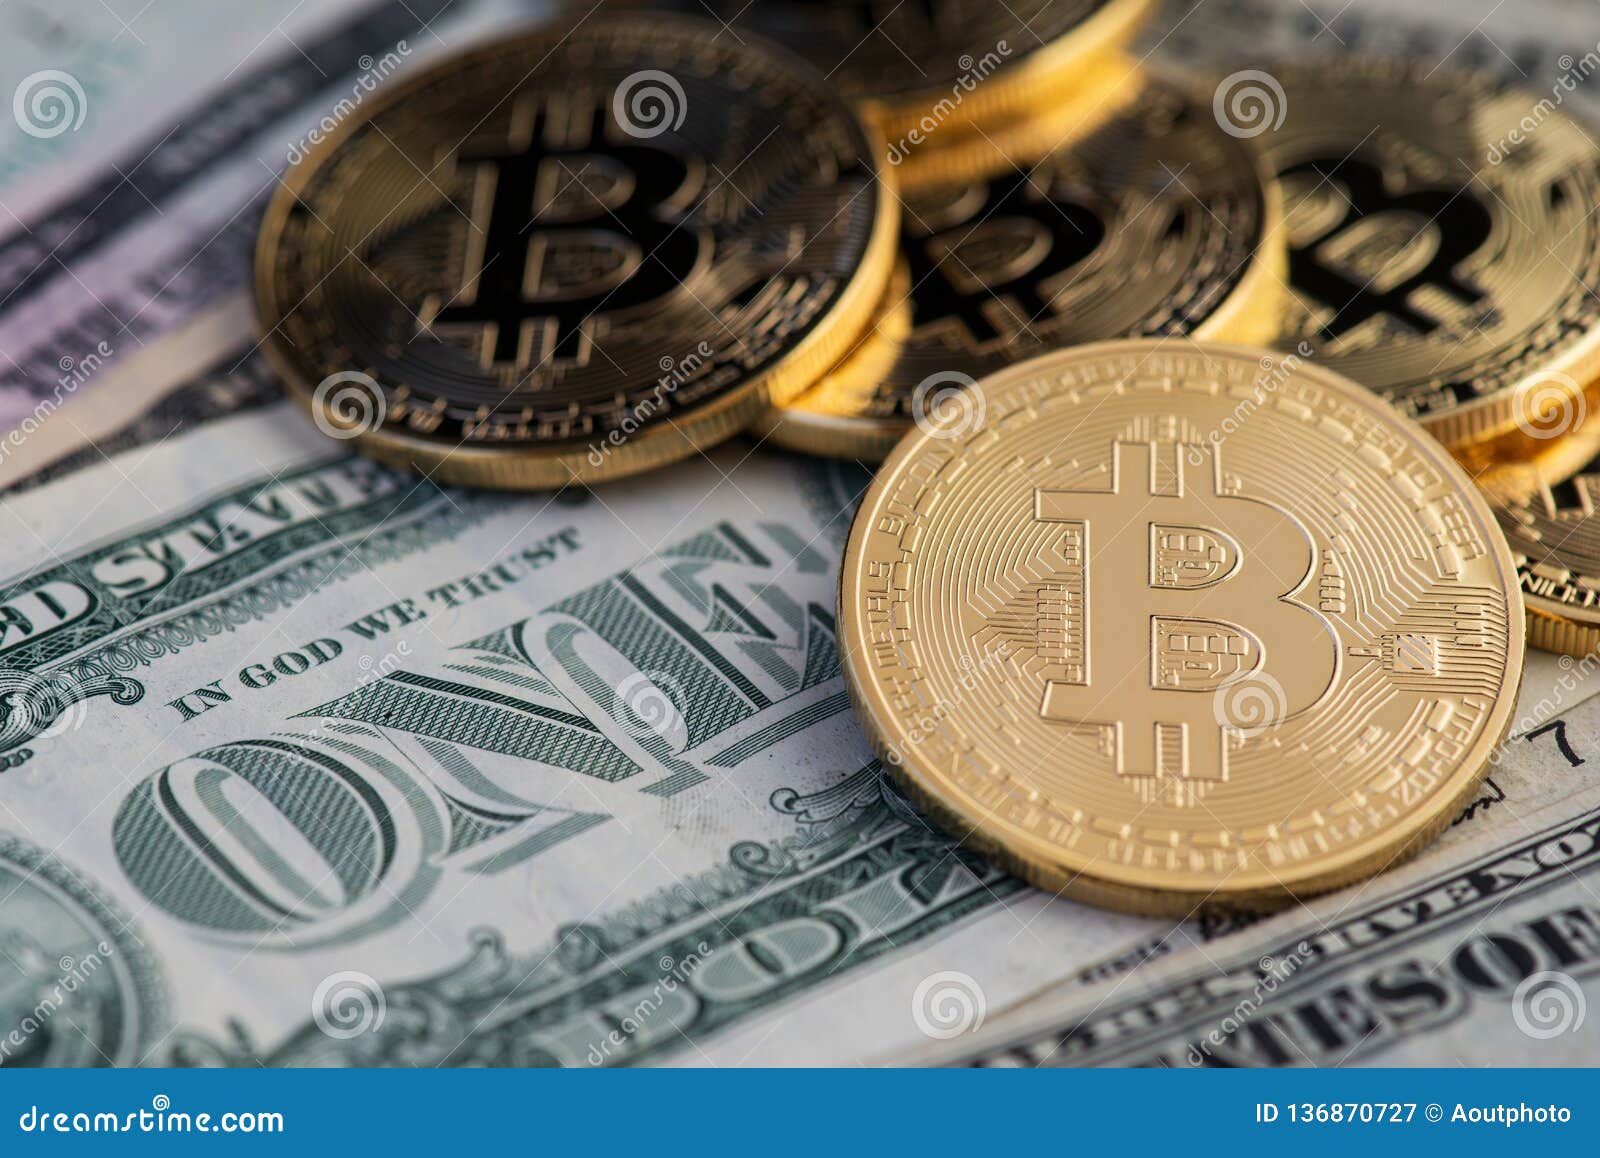 How many bitcoins are in a dollar asic майнер самый мощный